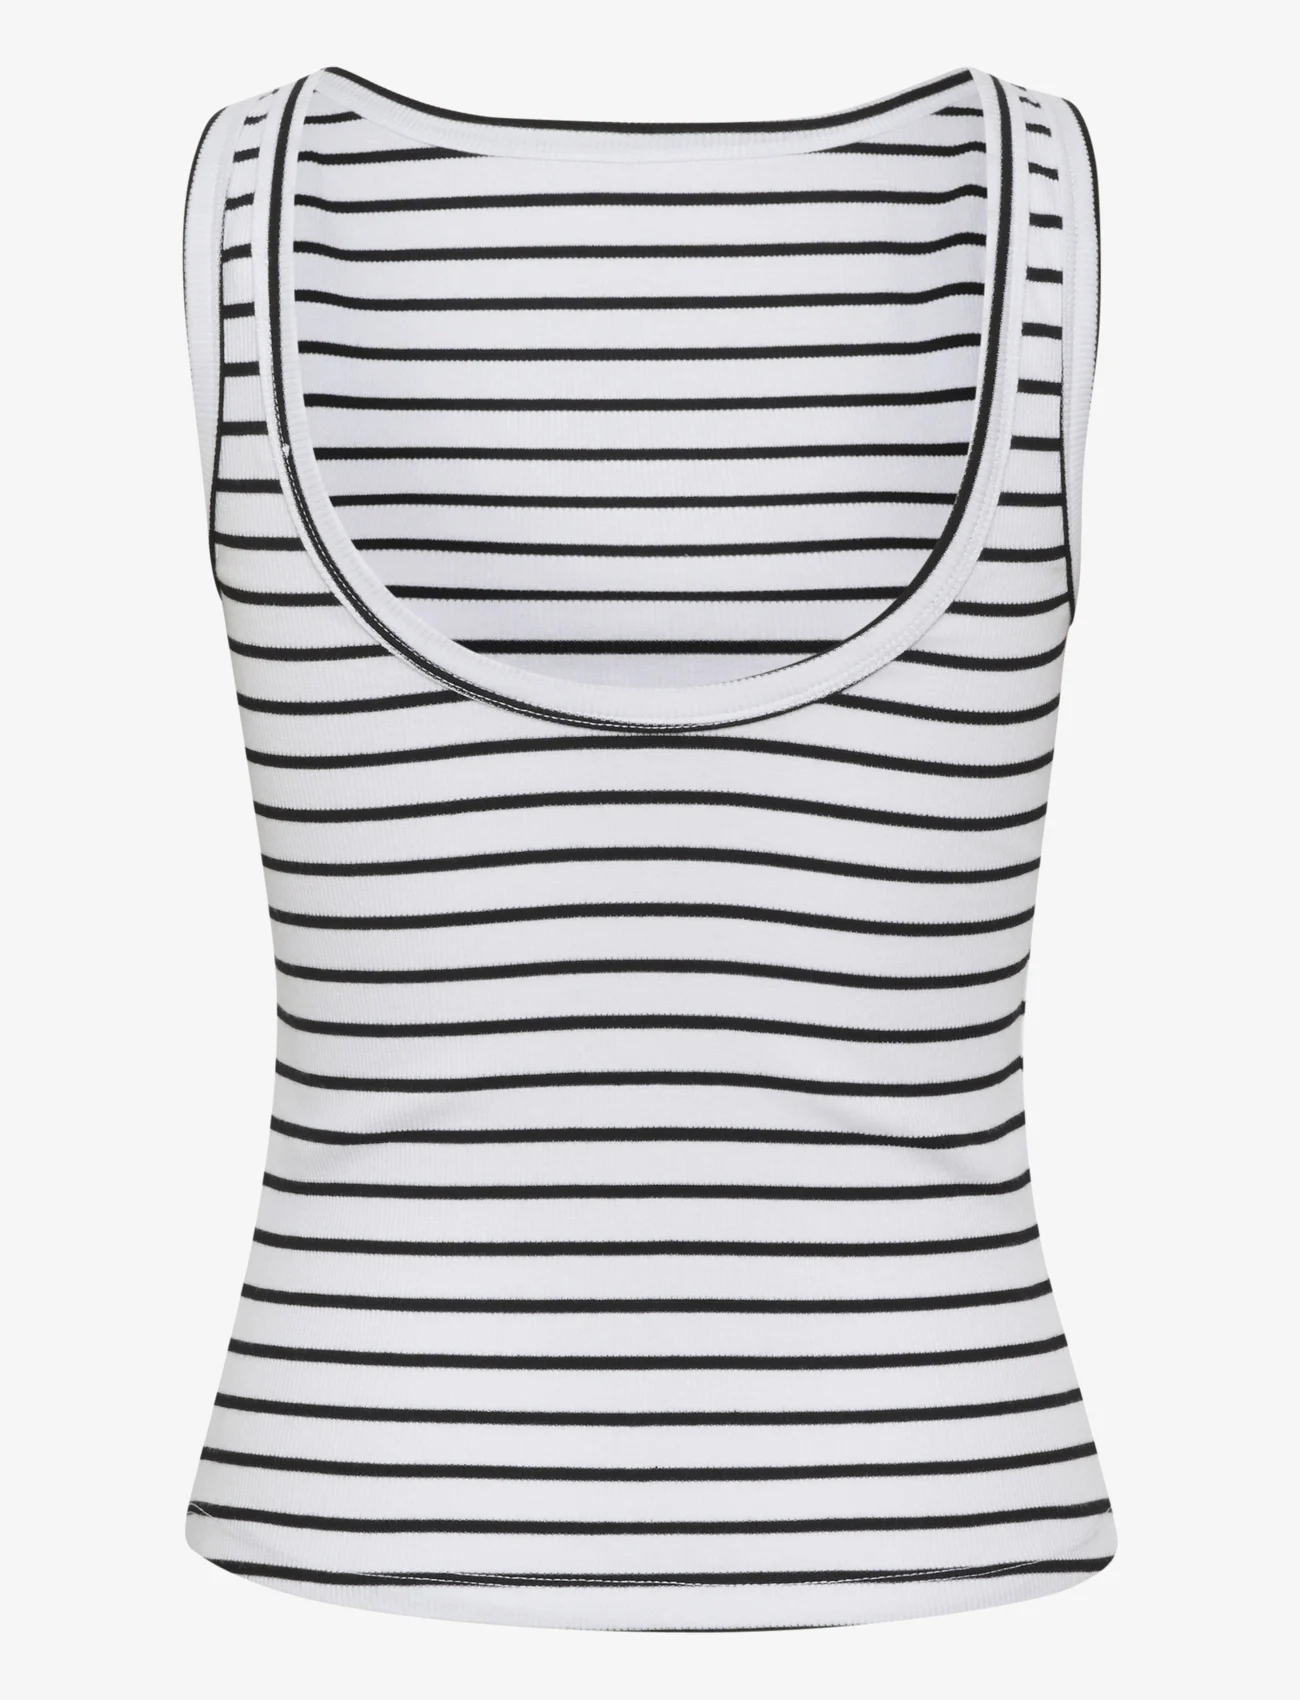 Gestuz - DrewGZ sl reversible stripe top NOO - linnen - bright white black stripe - 1